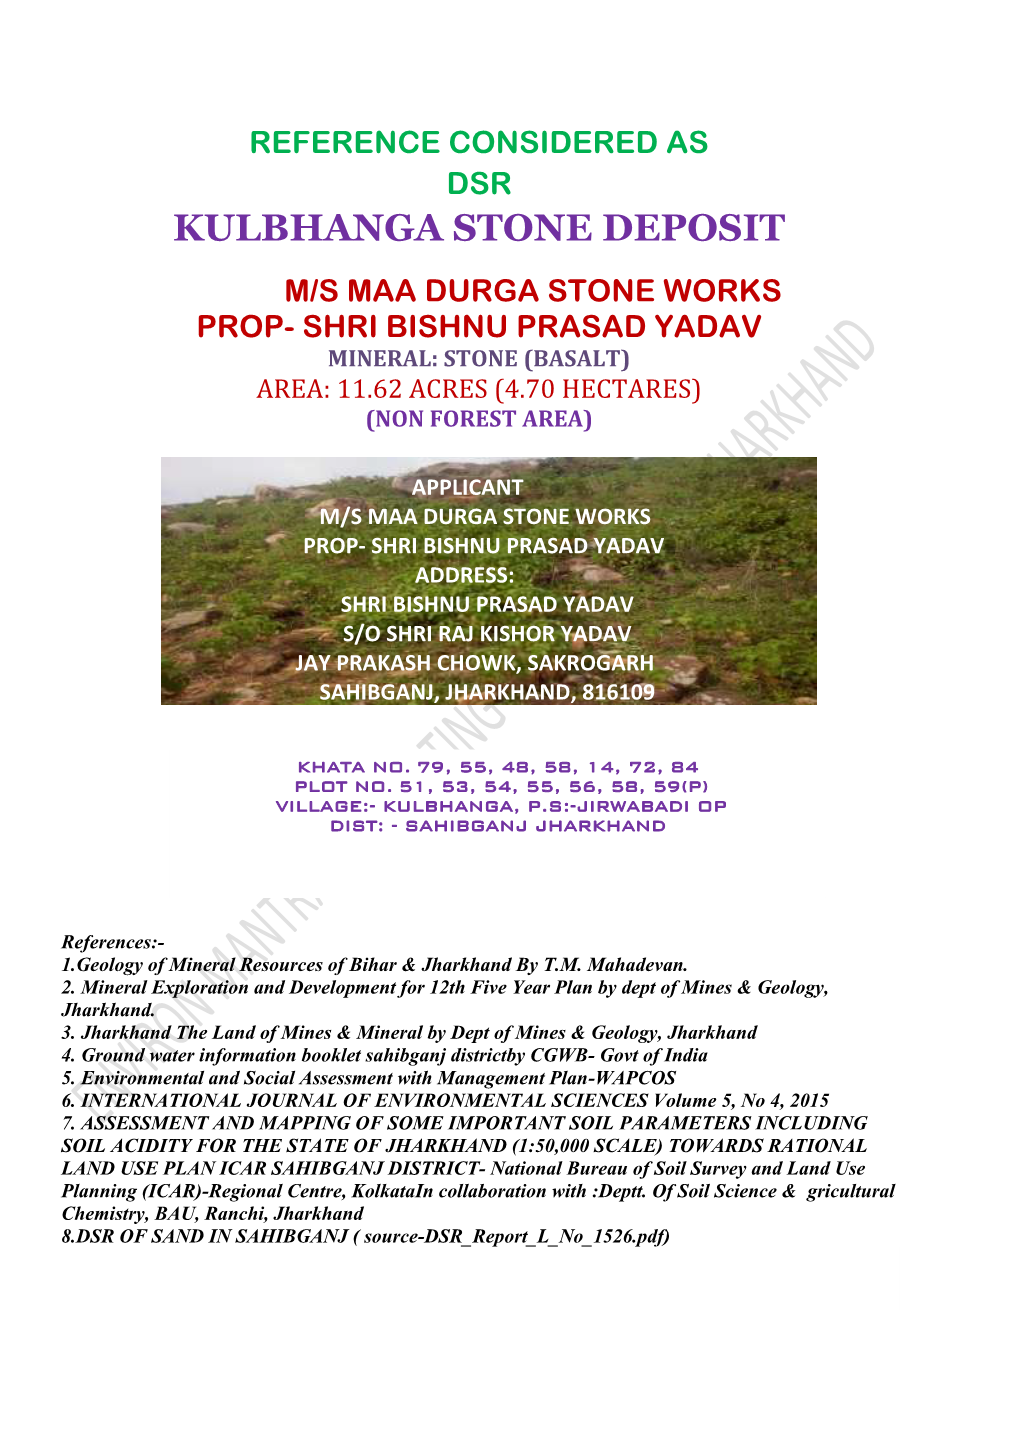 Kulbhanga Stone Deposit M/S Maa Durga Stone Works Prop- Shri Bishnu Prasad Yadav Mineral: Stone (Basalt) Area: 11.62 Acres (4.70 Hectares) (Non Forest Area)